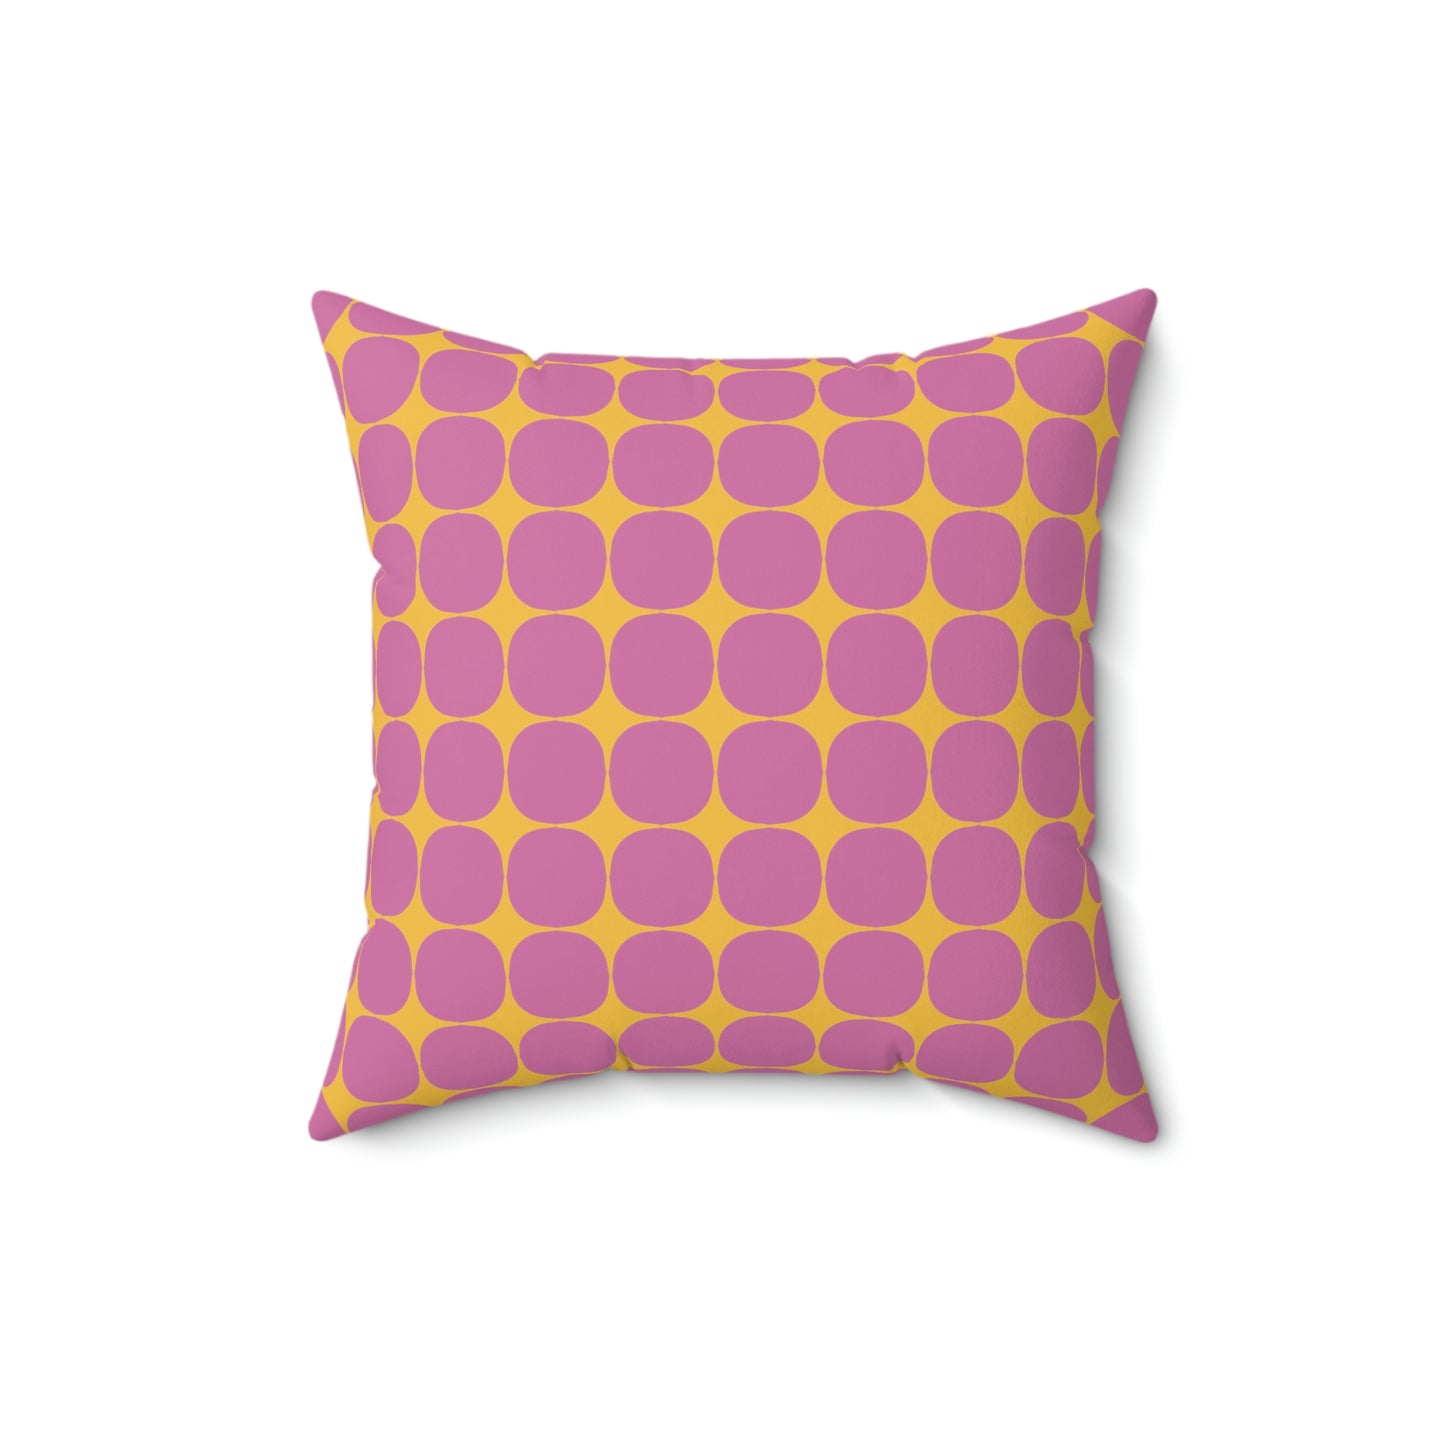 Spun Polyester Square Pillow Case “Rhombus Star on Light Pink”